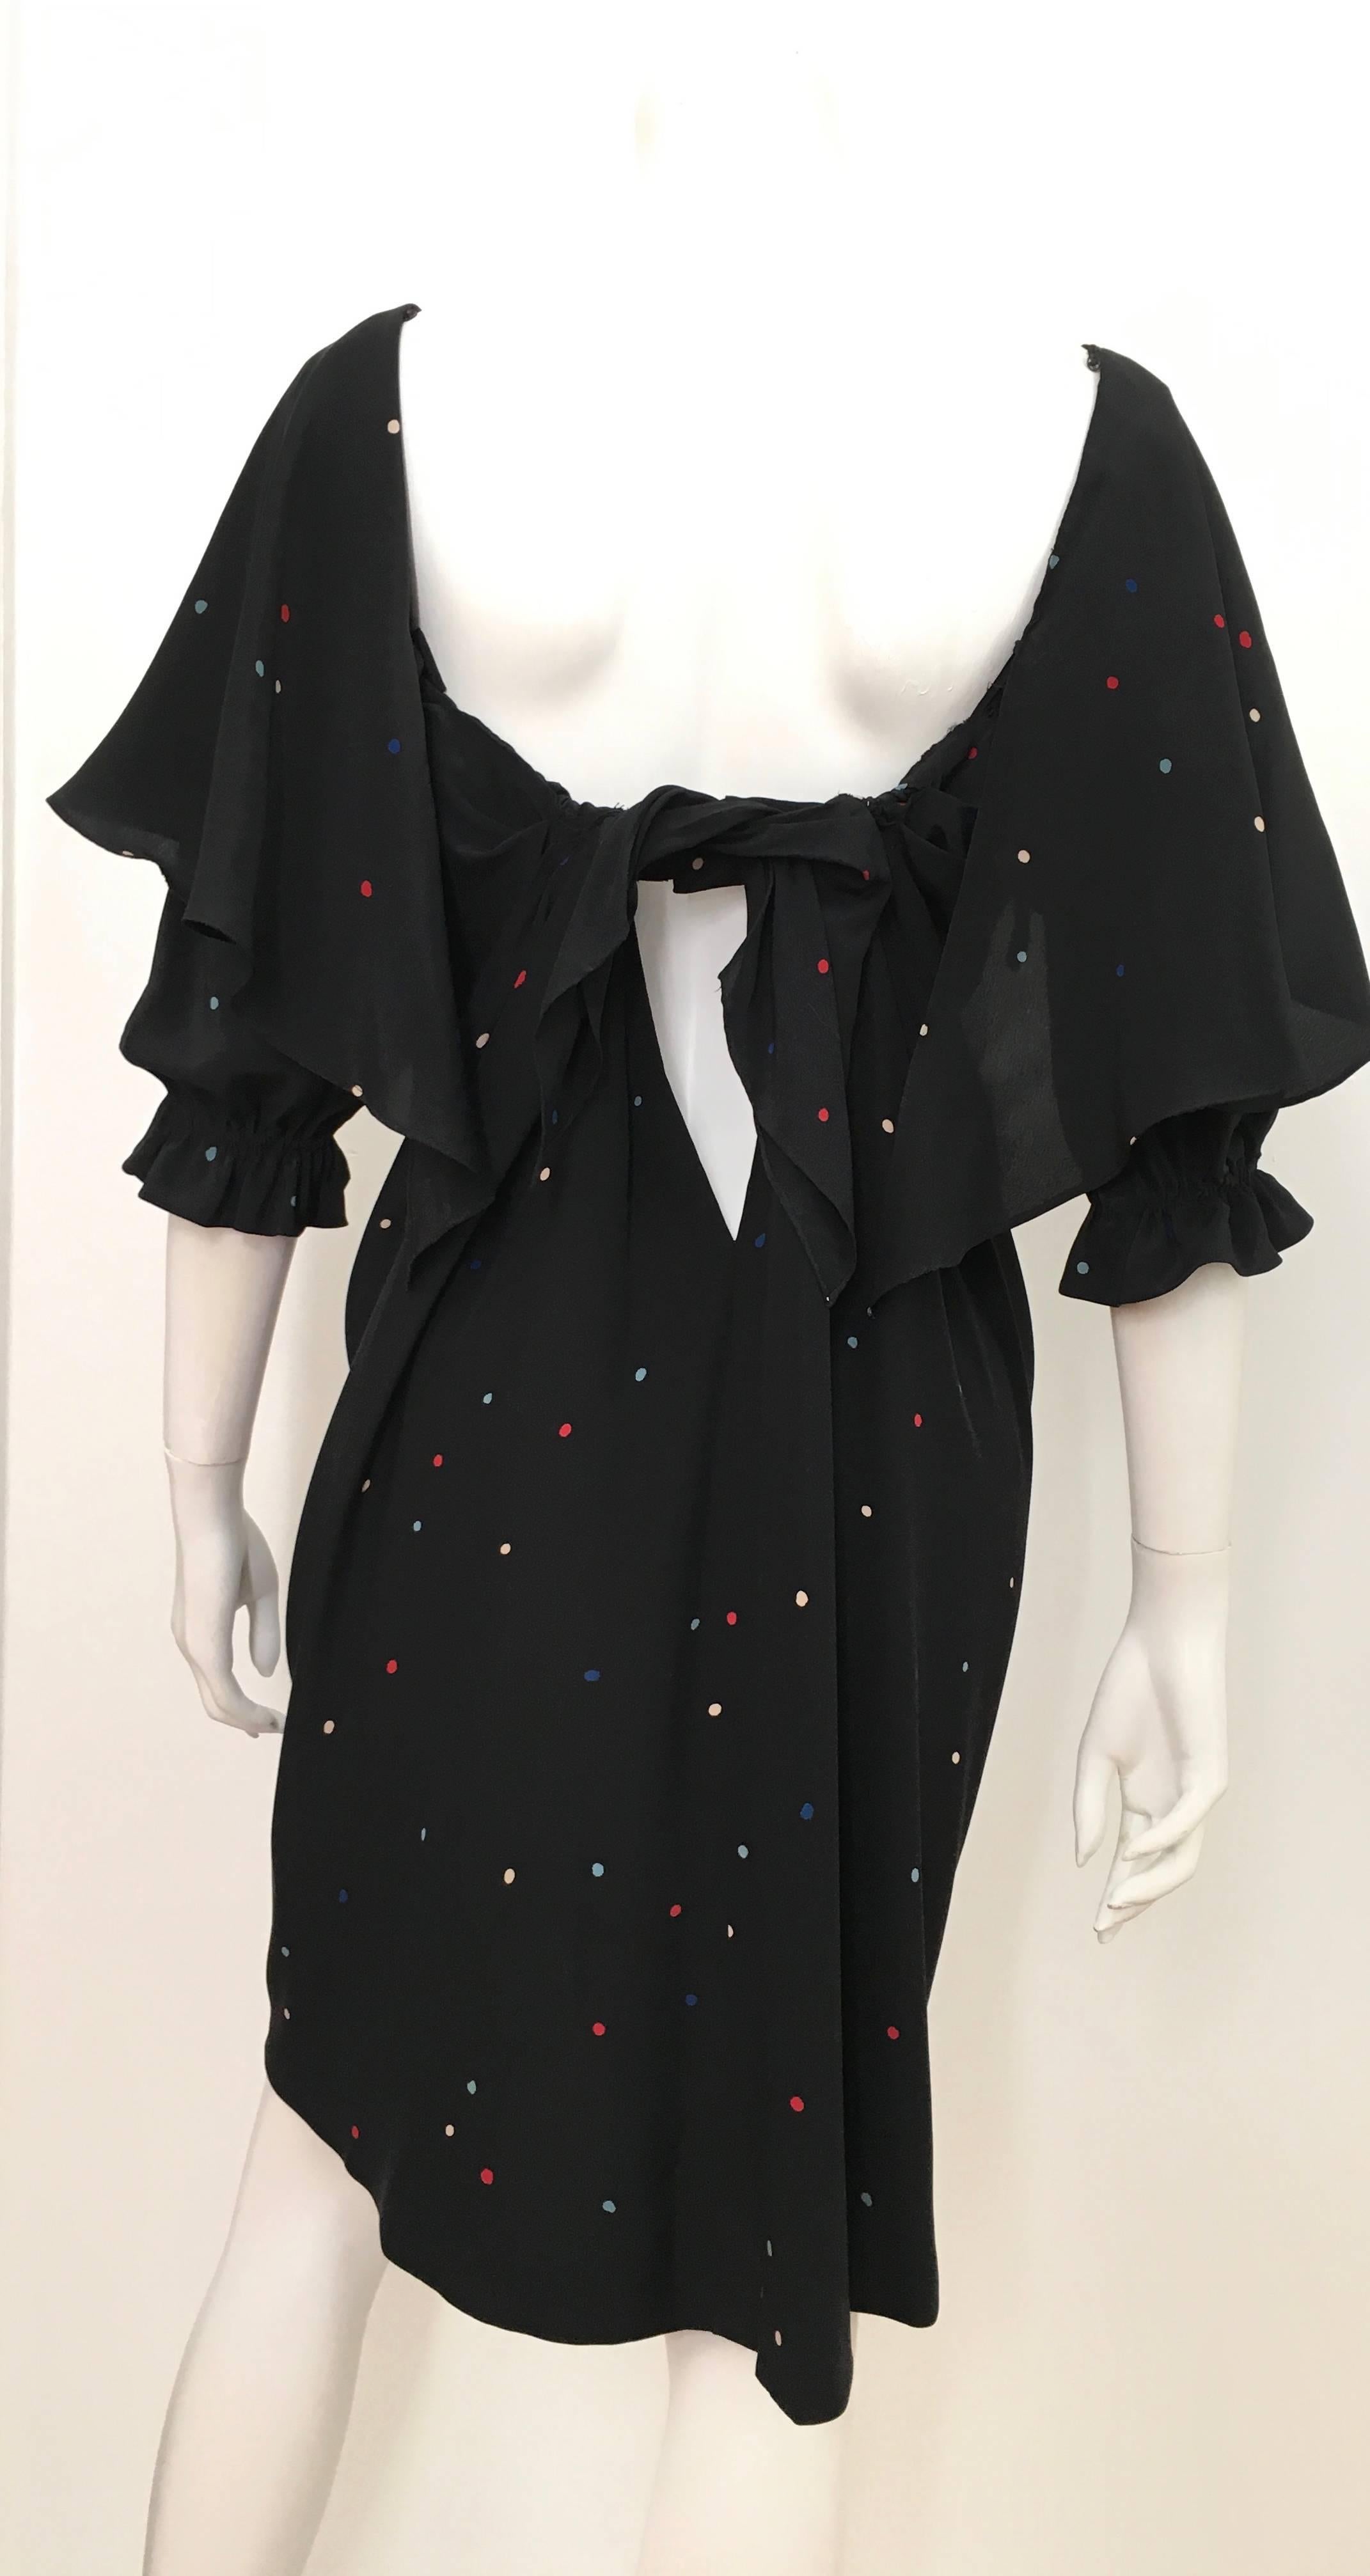 Women's Halston 1970s Black Silk Polka Dot Dress Size 6 / 8.